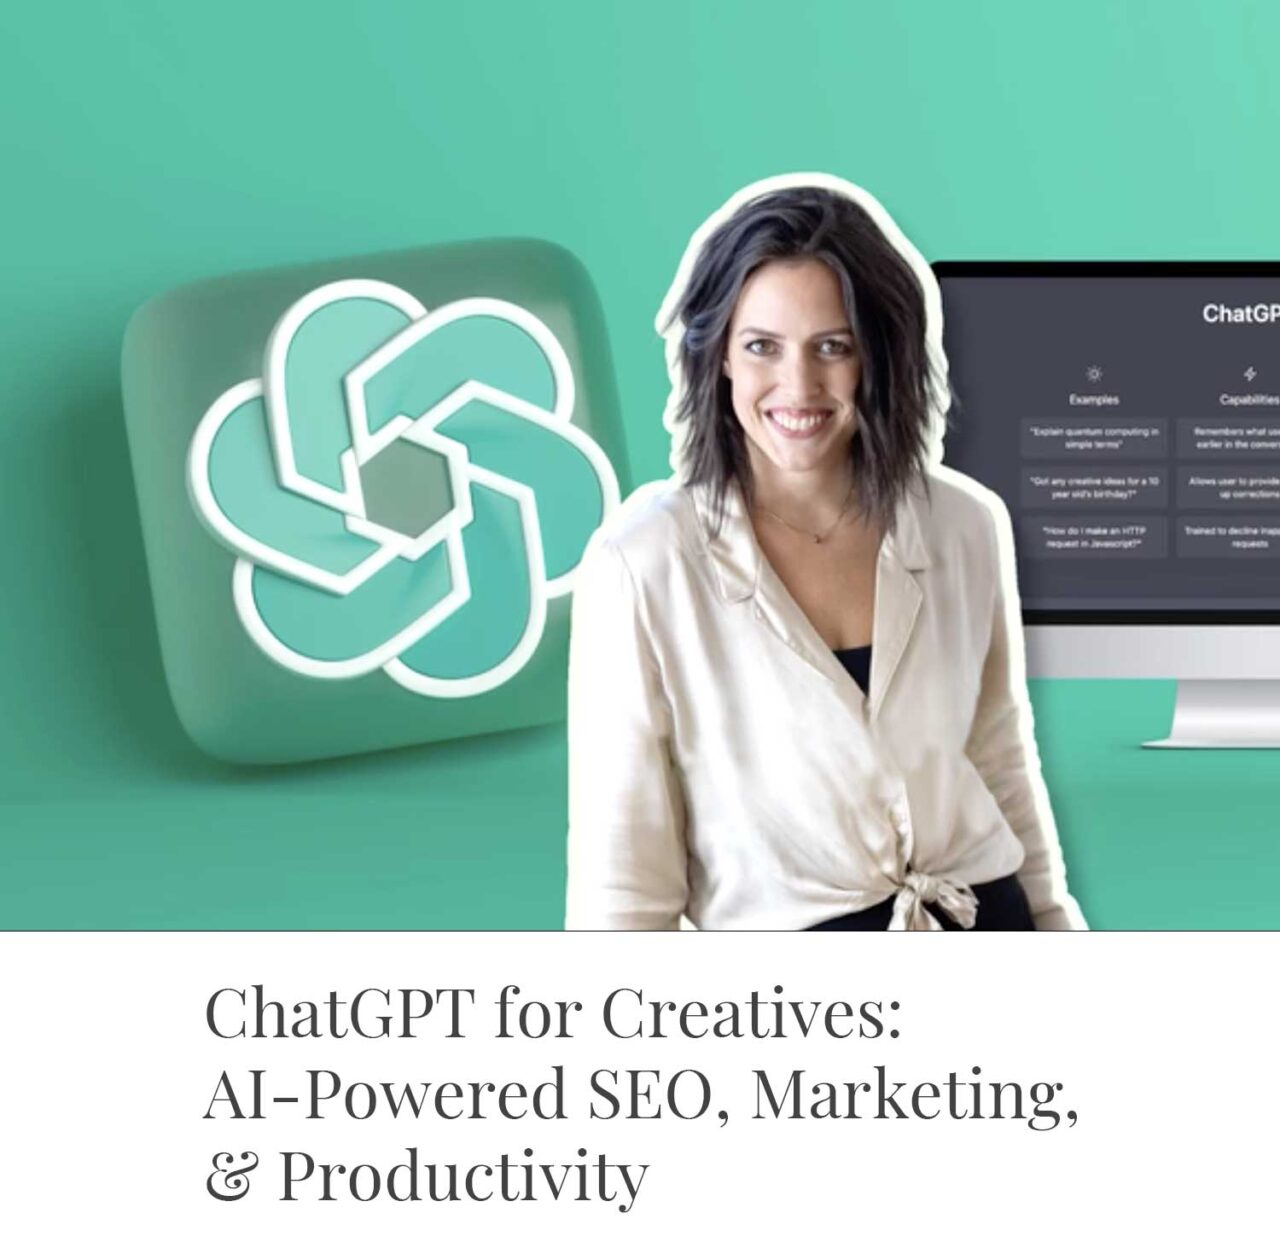 ChatGPT for Creatives: AI-Powered SEO, Marketing, & Productivity